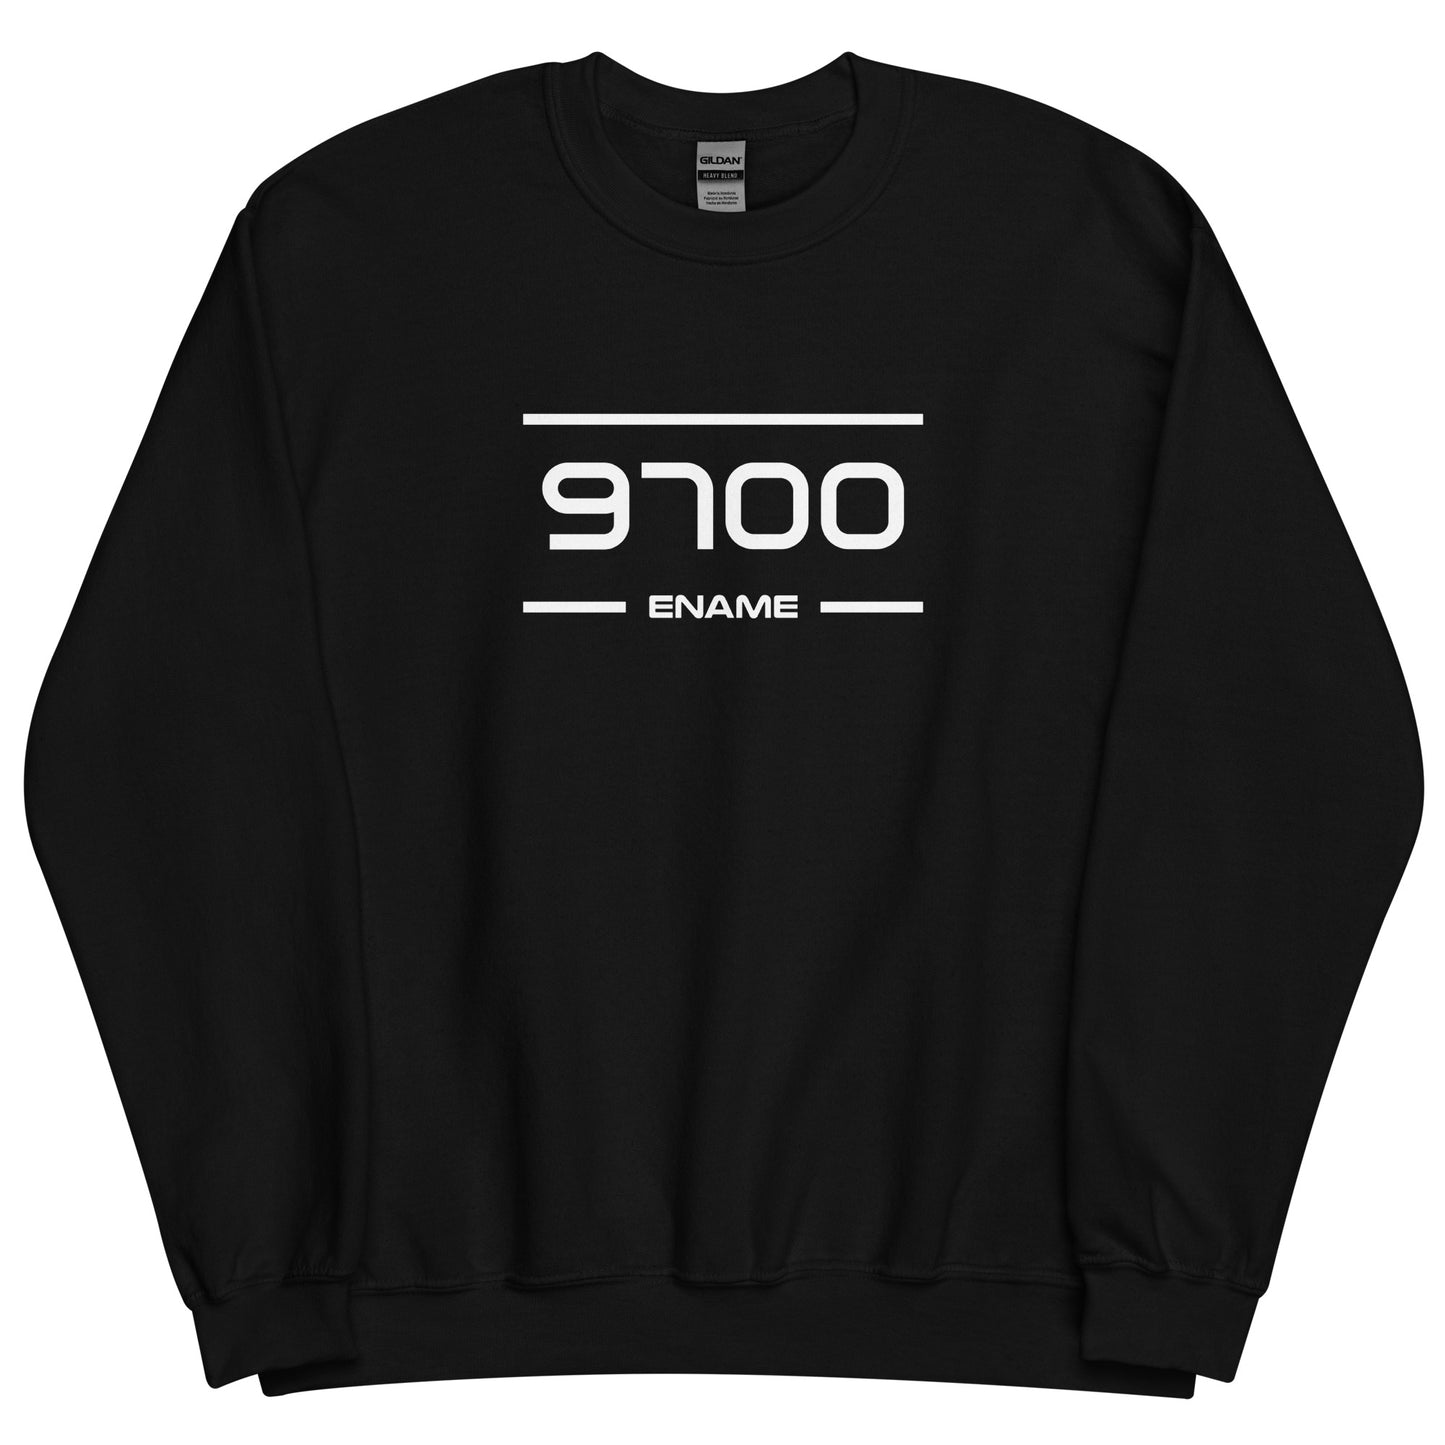 Sweater - 9700 - Ename (M/V)